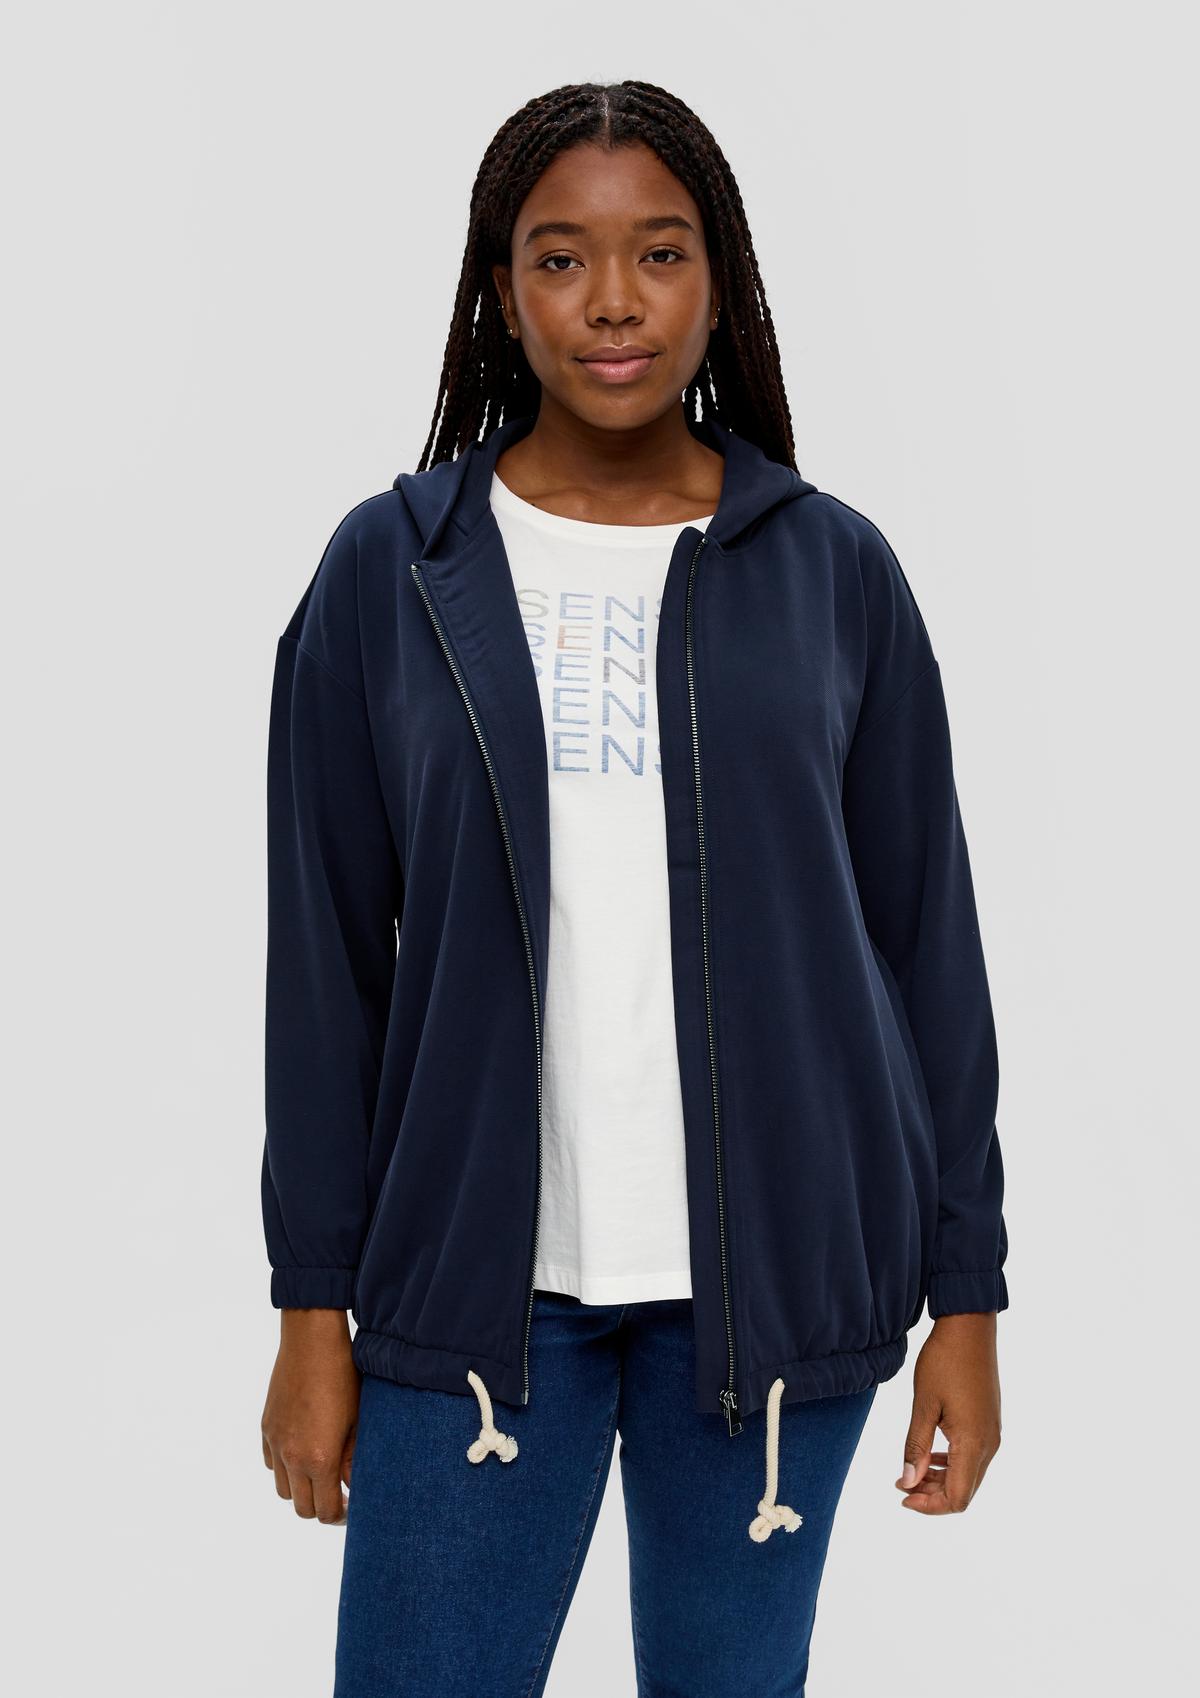 s.Oliver Sweatshirt jacket in a modal blend